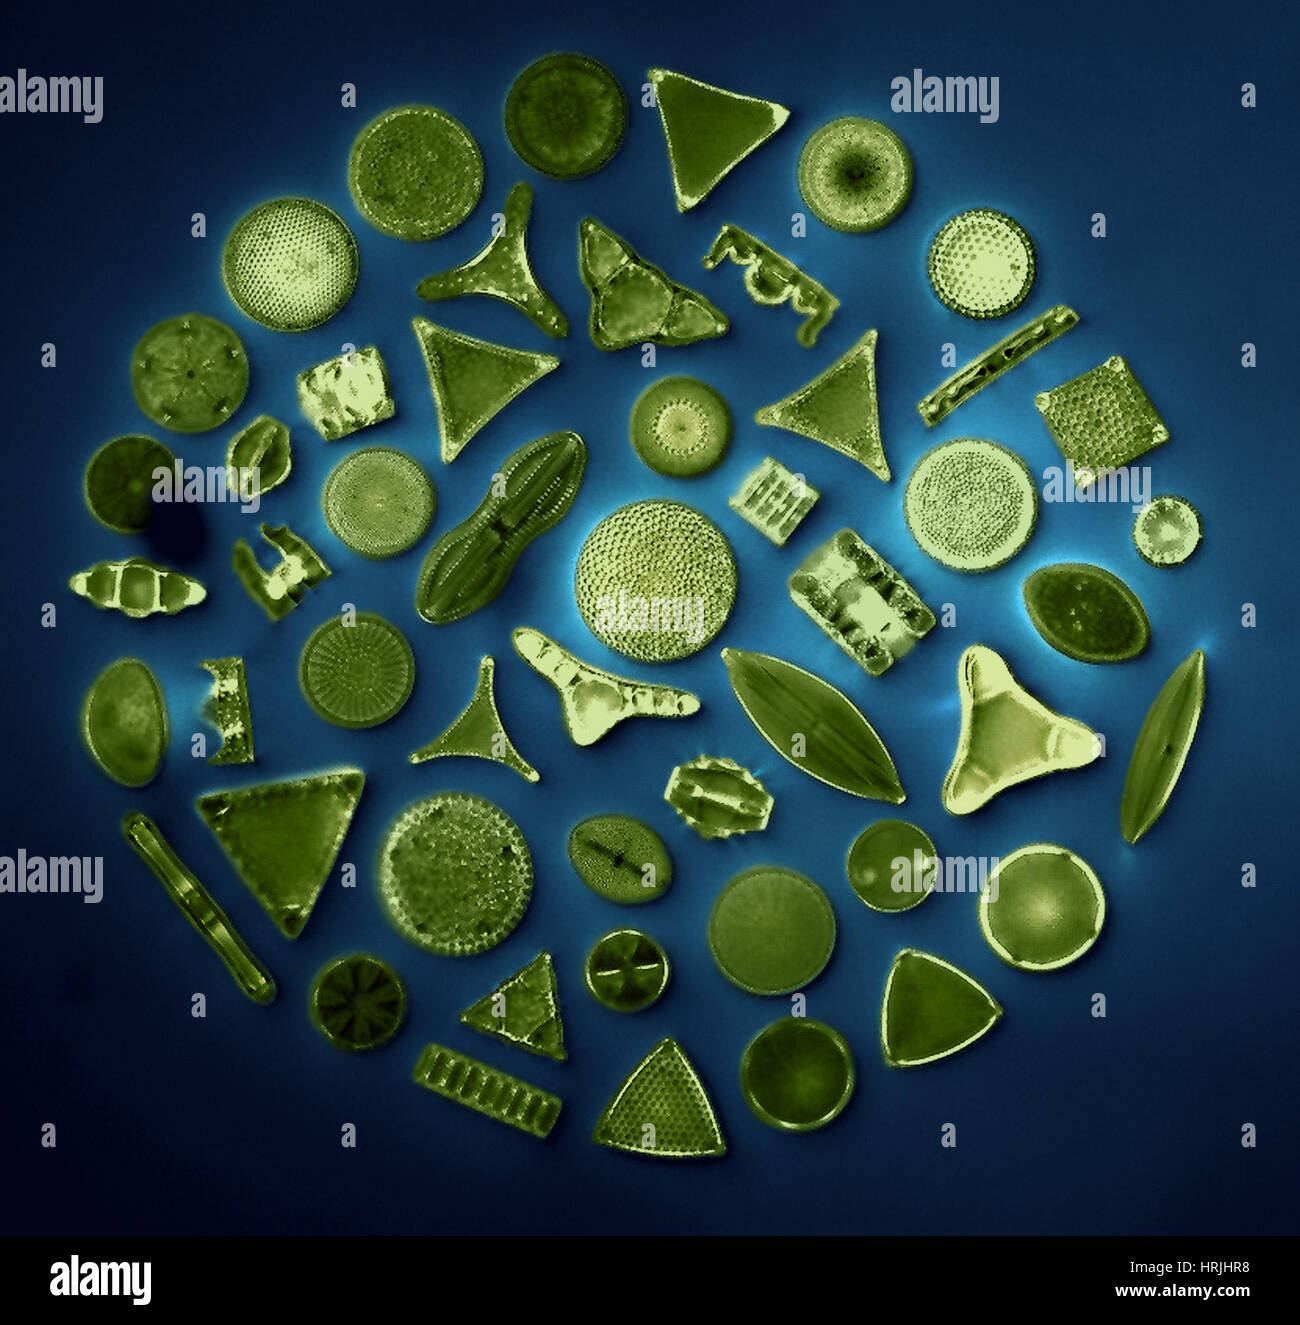 50 Diatom Species, Photomicrograph Stock Photo